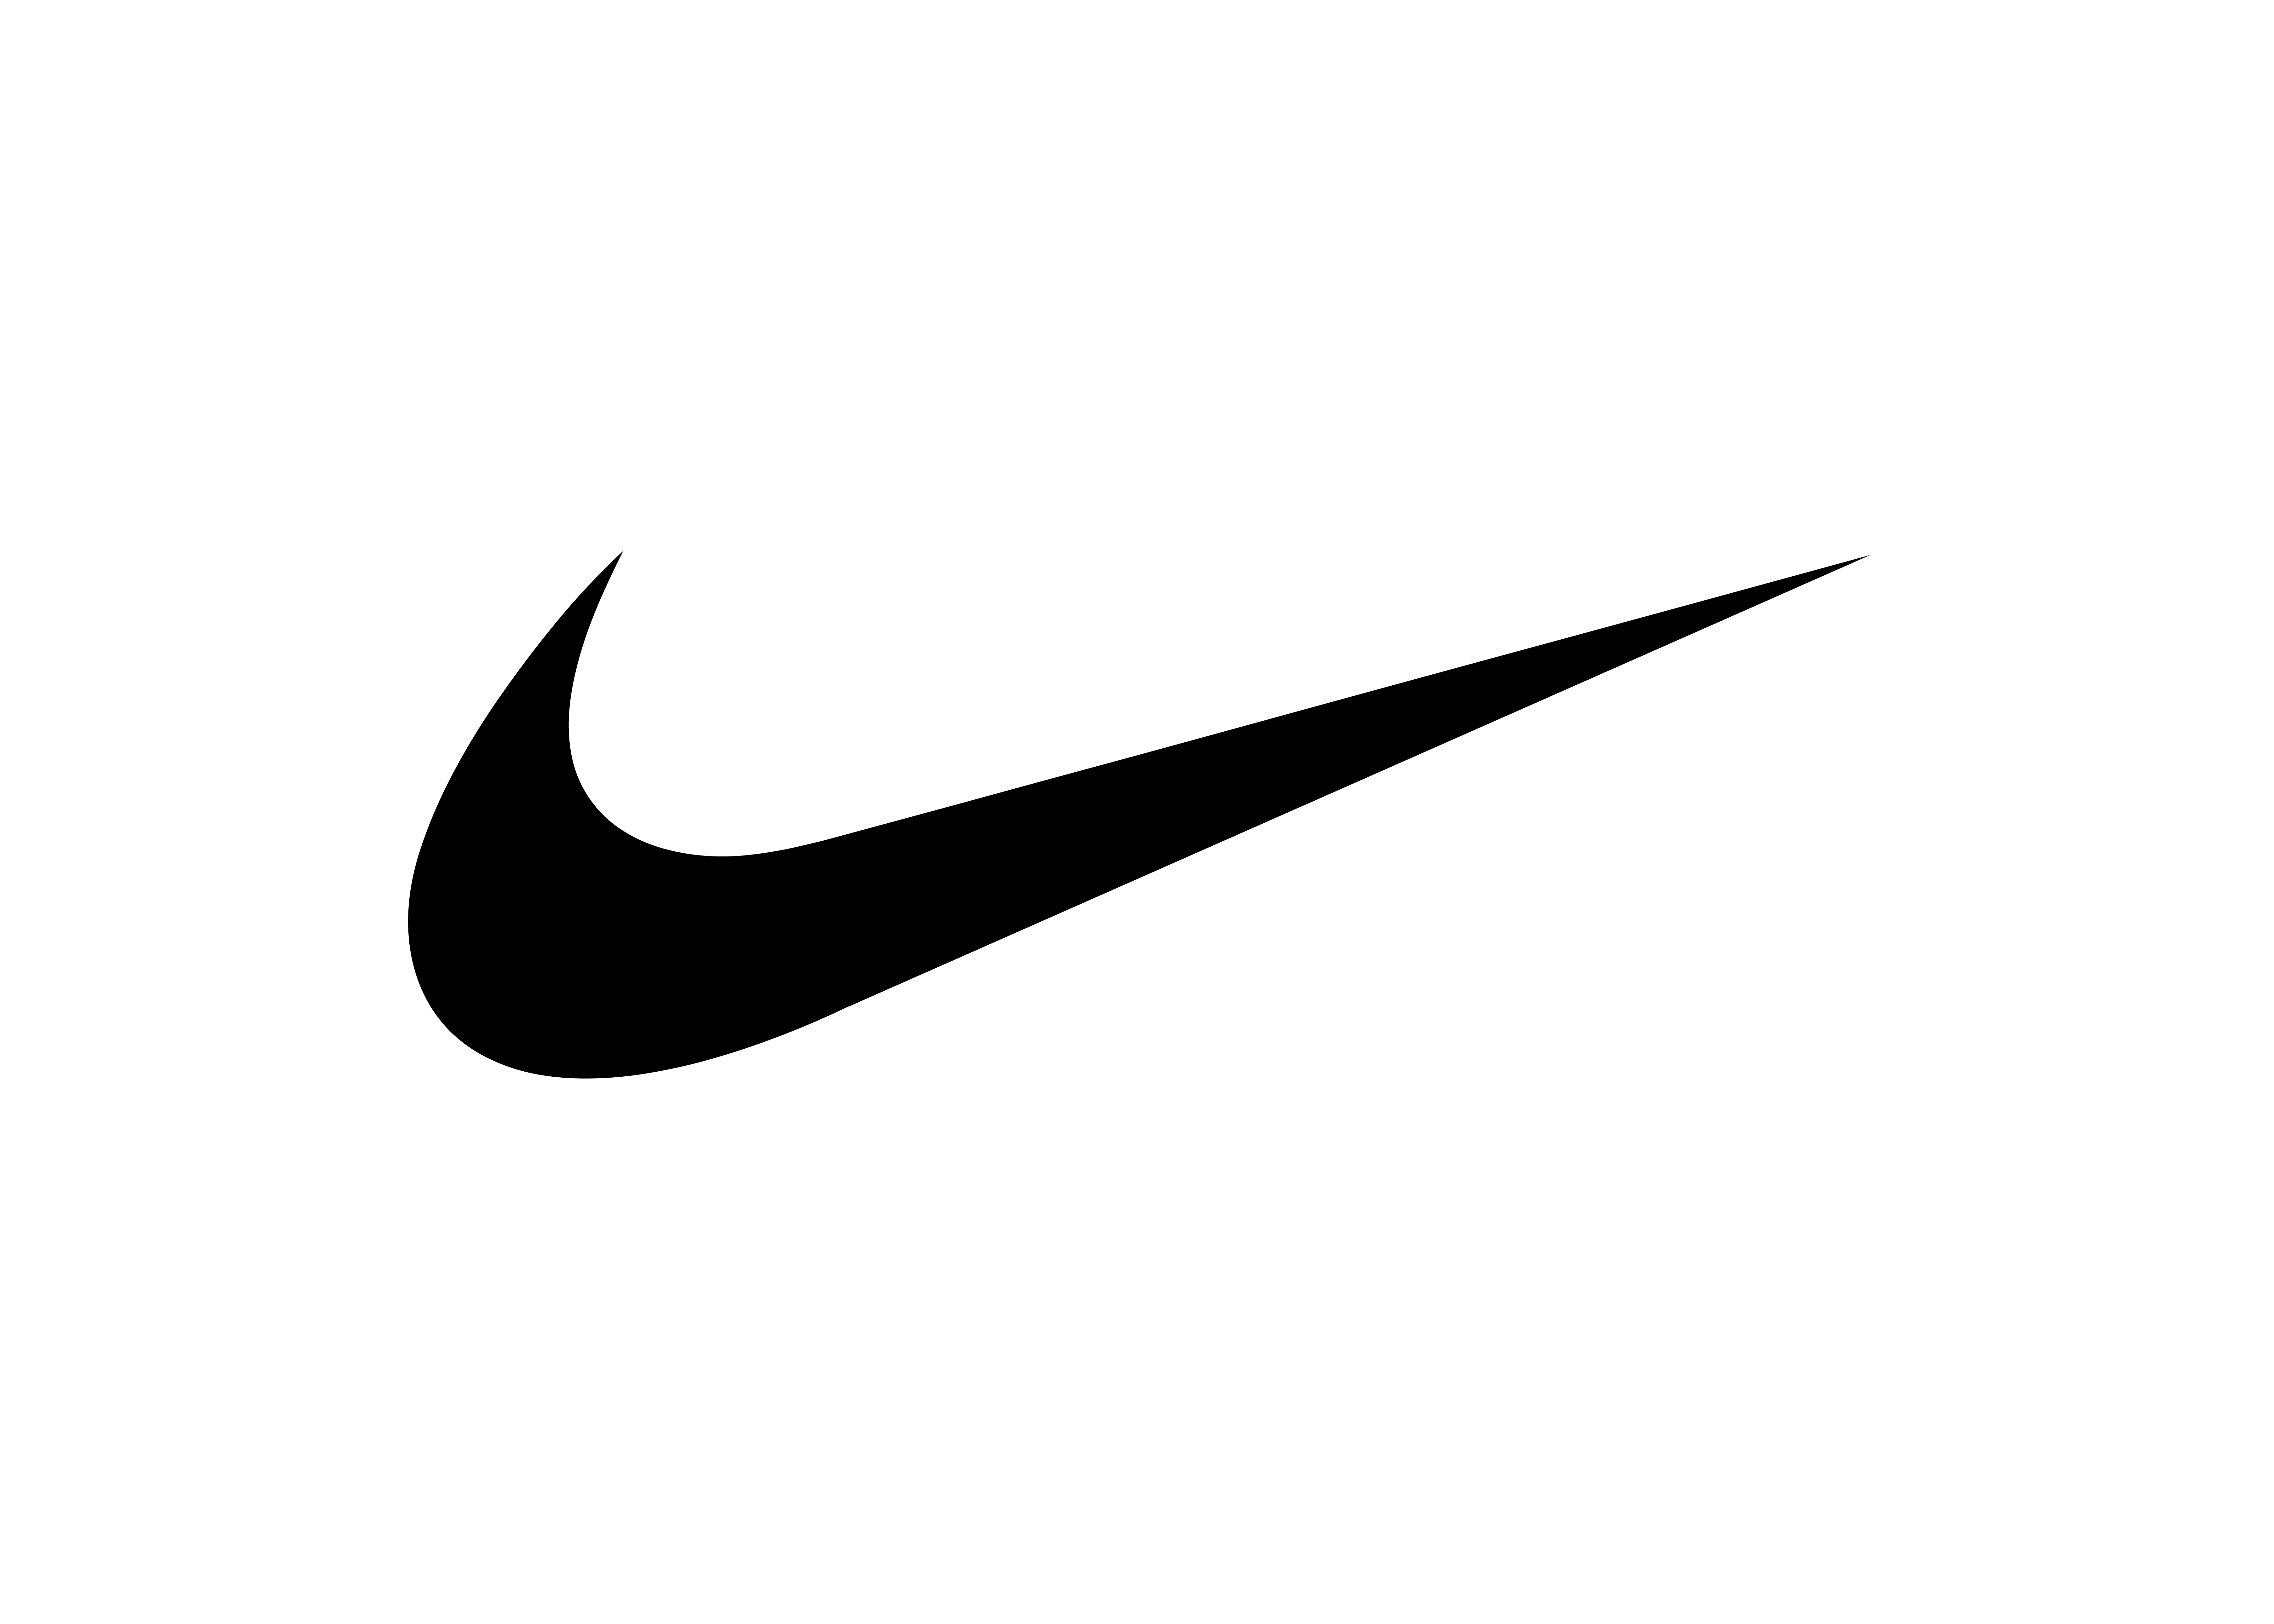 Nike Symbol Drawing - How To Draw Nike Logo Symbol.timelapse Video # ...